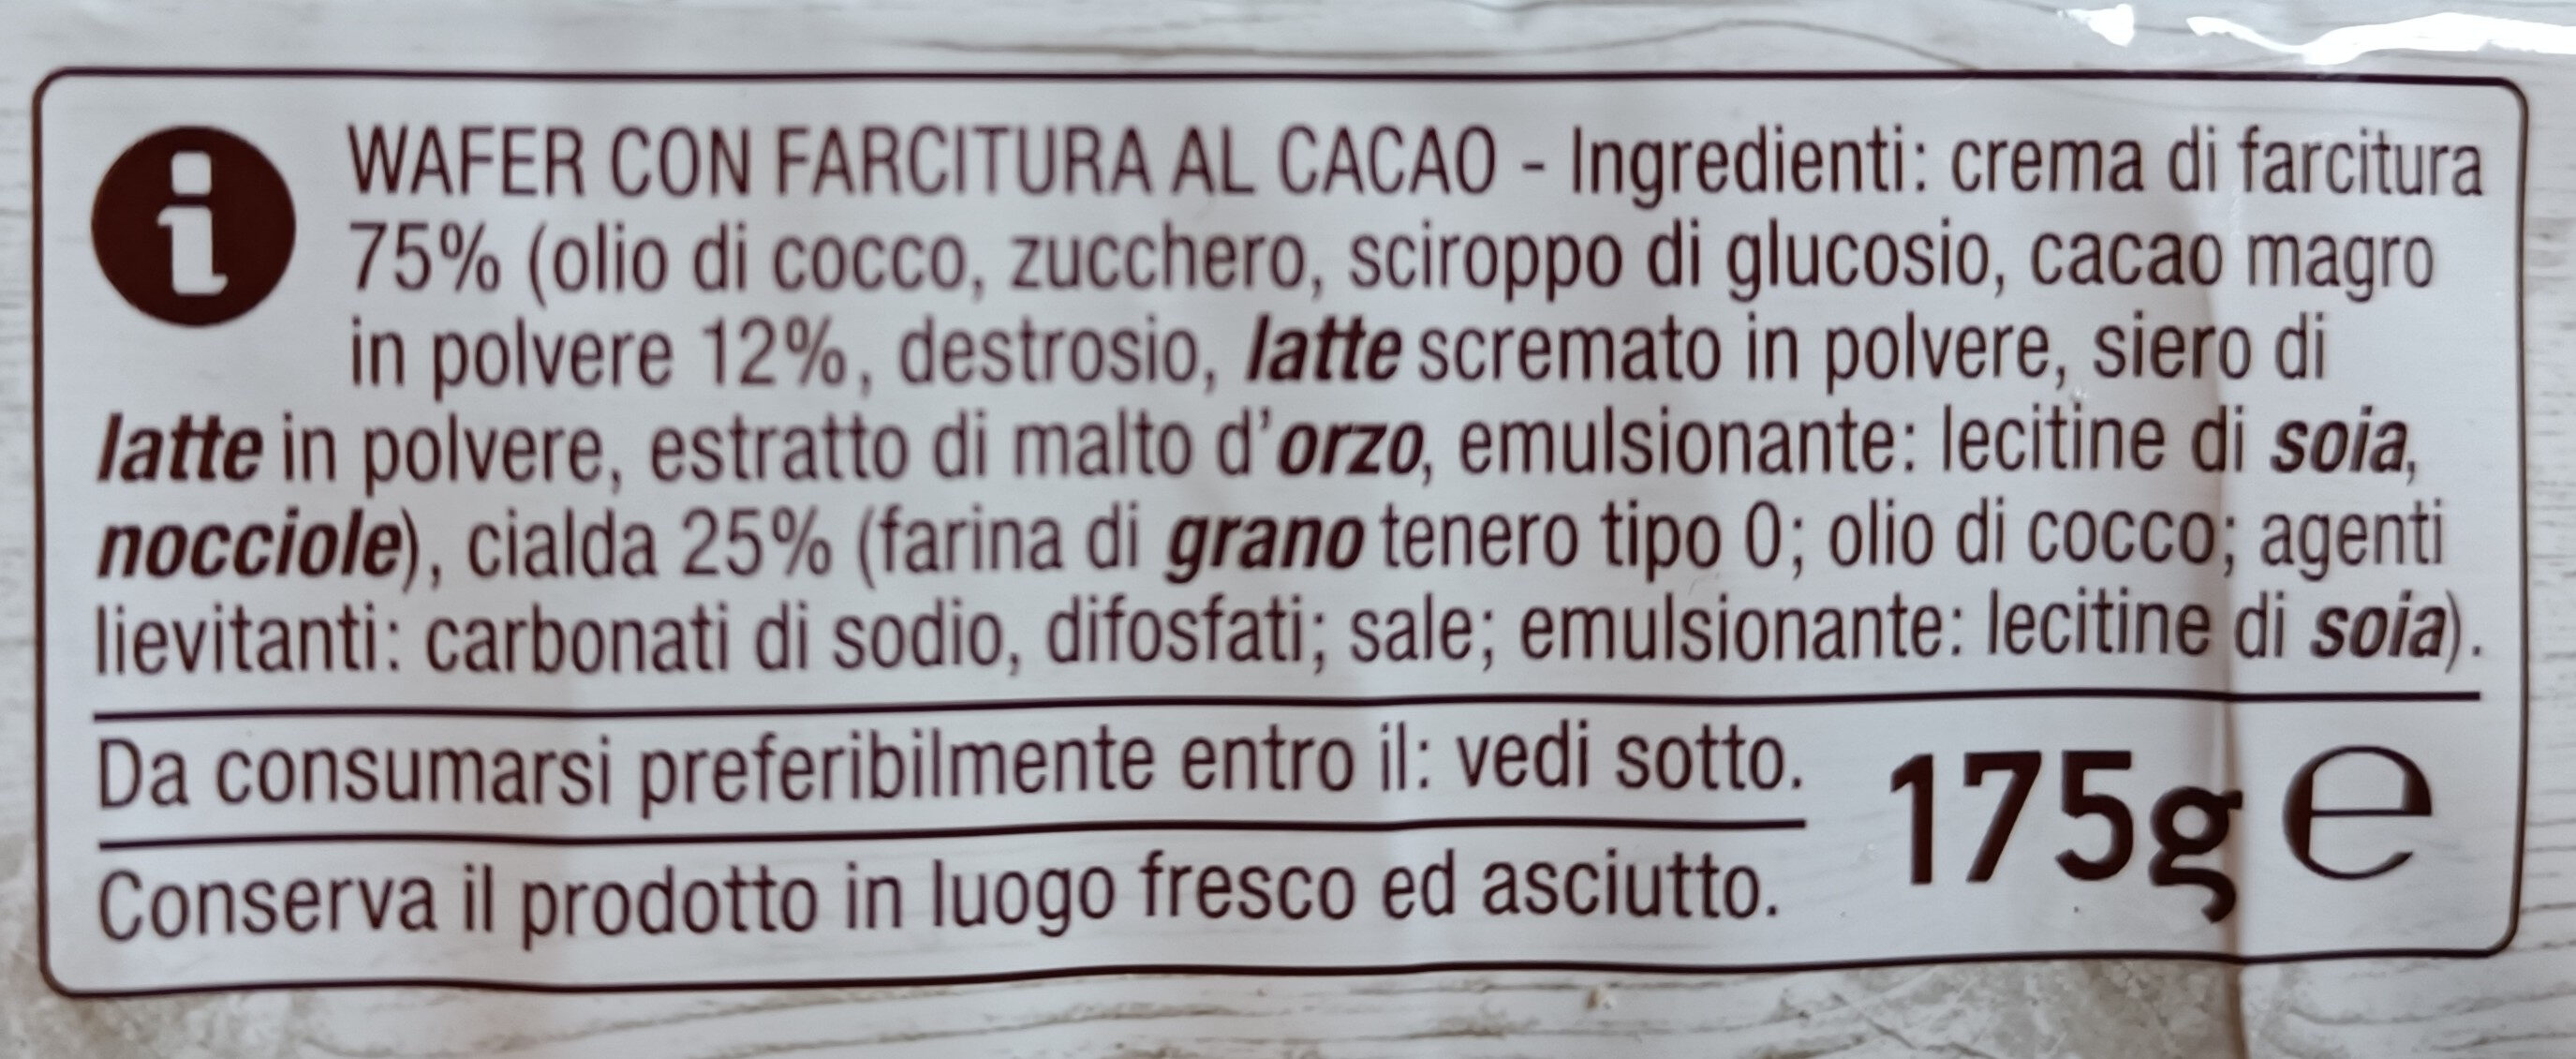 Wafer Cacao Coop - Ingredienti